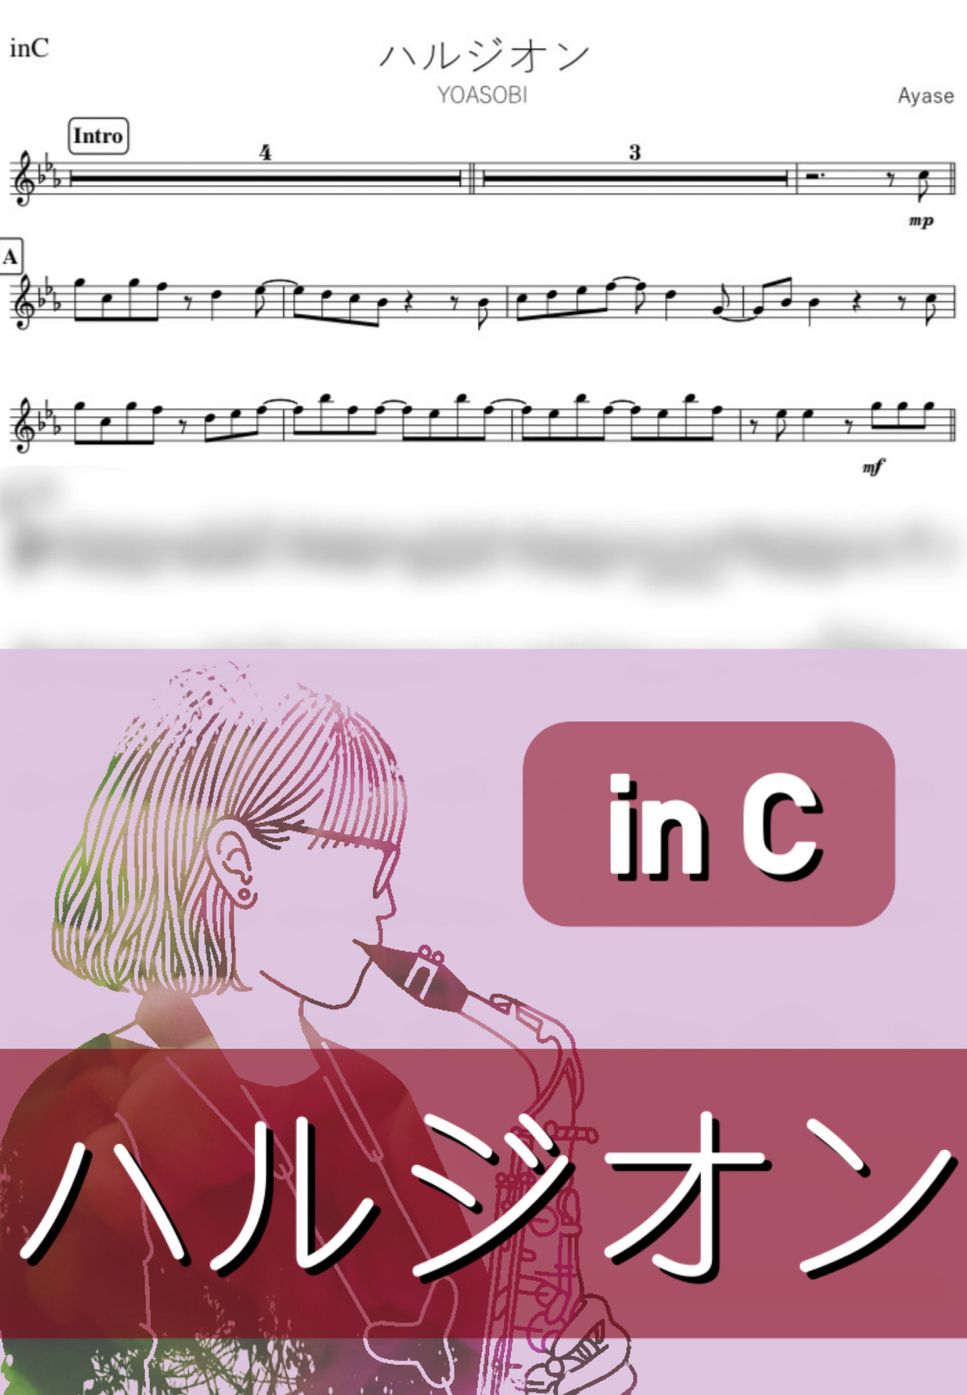 YOASOBI - ハルジオン (C) by kanamusic